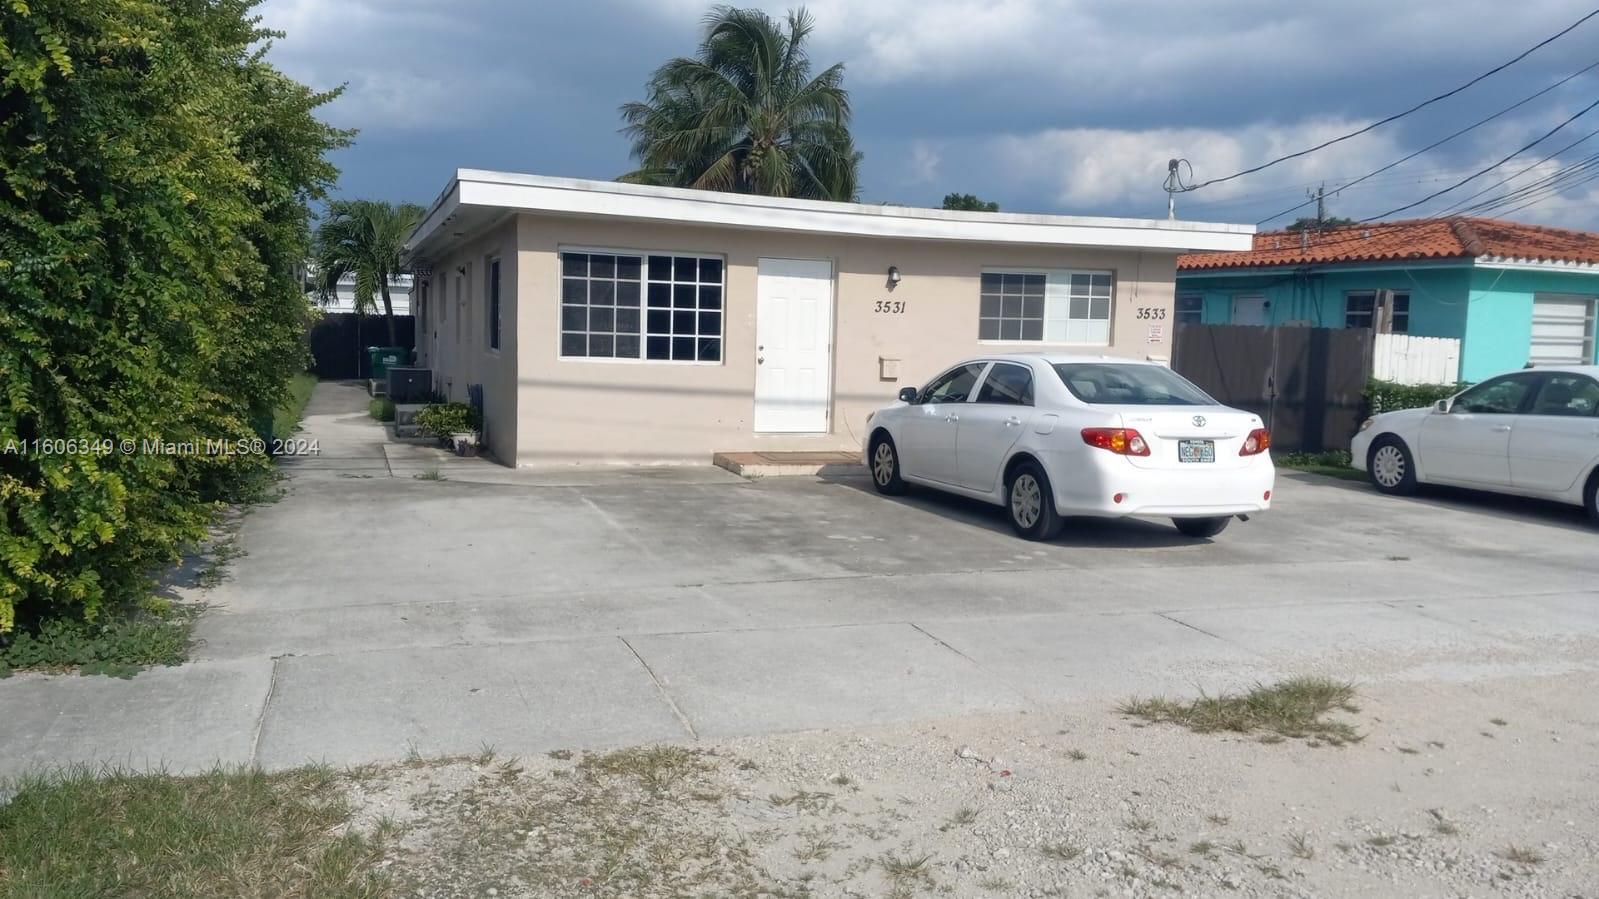 Rental Property at 3531 Sw 91st Ave, Miami, Broward County, Florida -  - $829,999 MO.